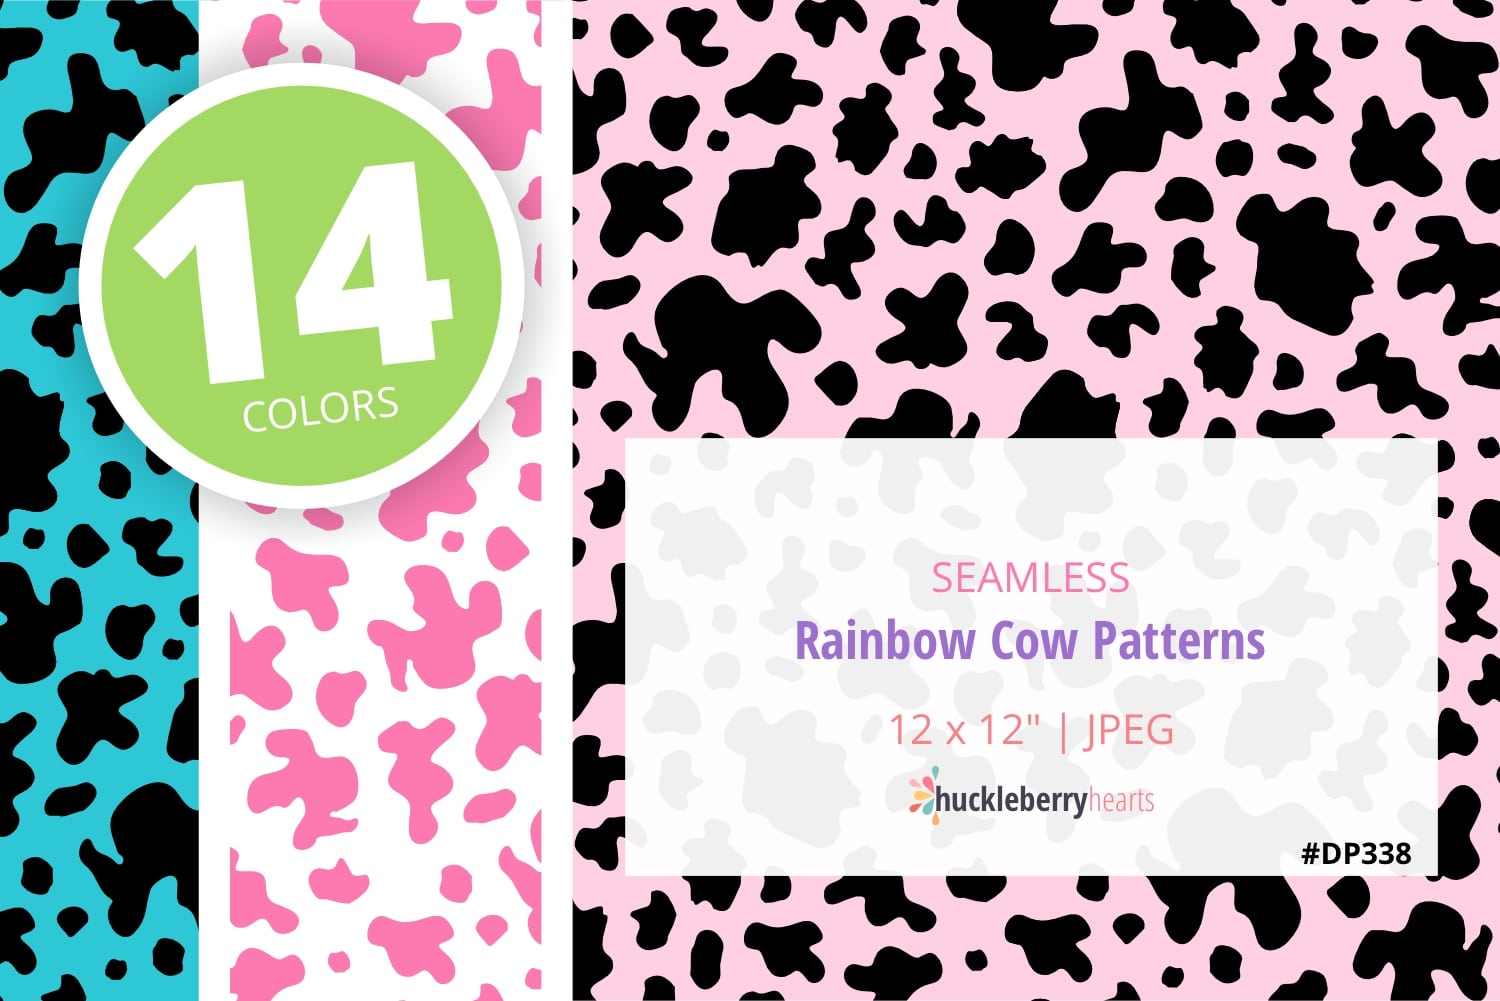 Rainbow Cow Patterns